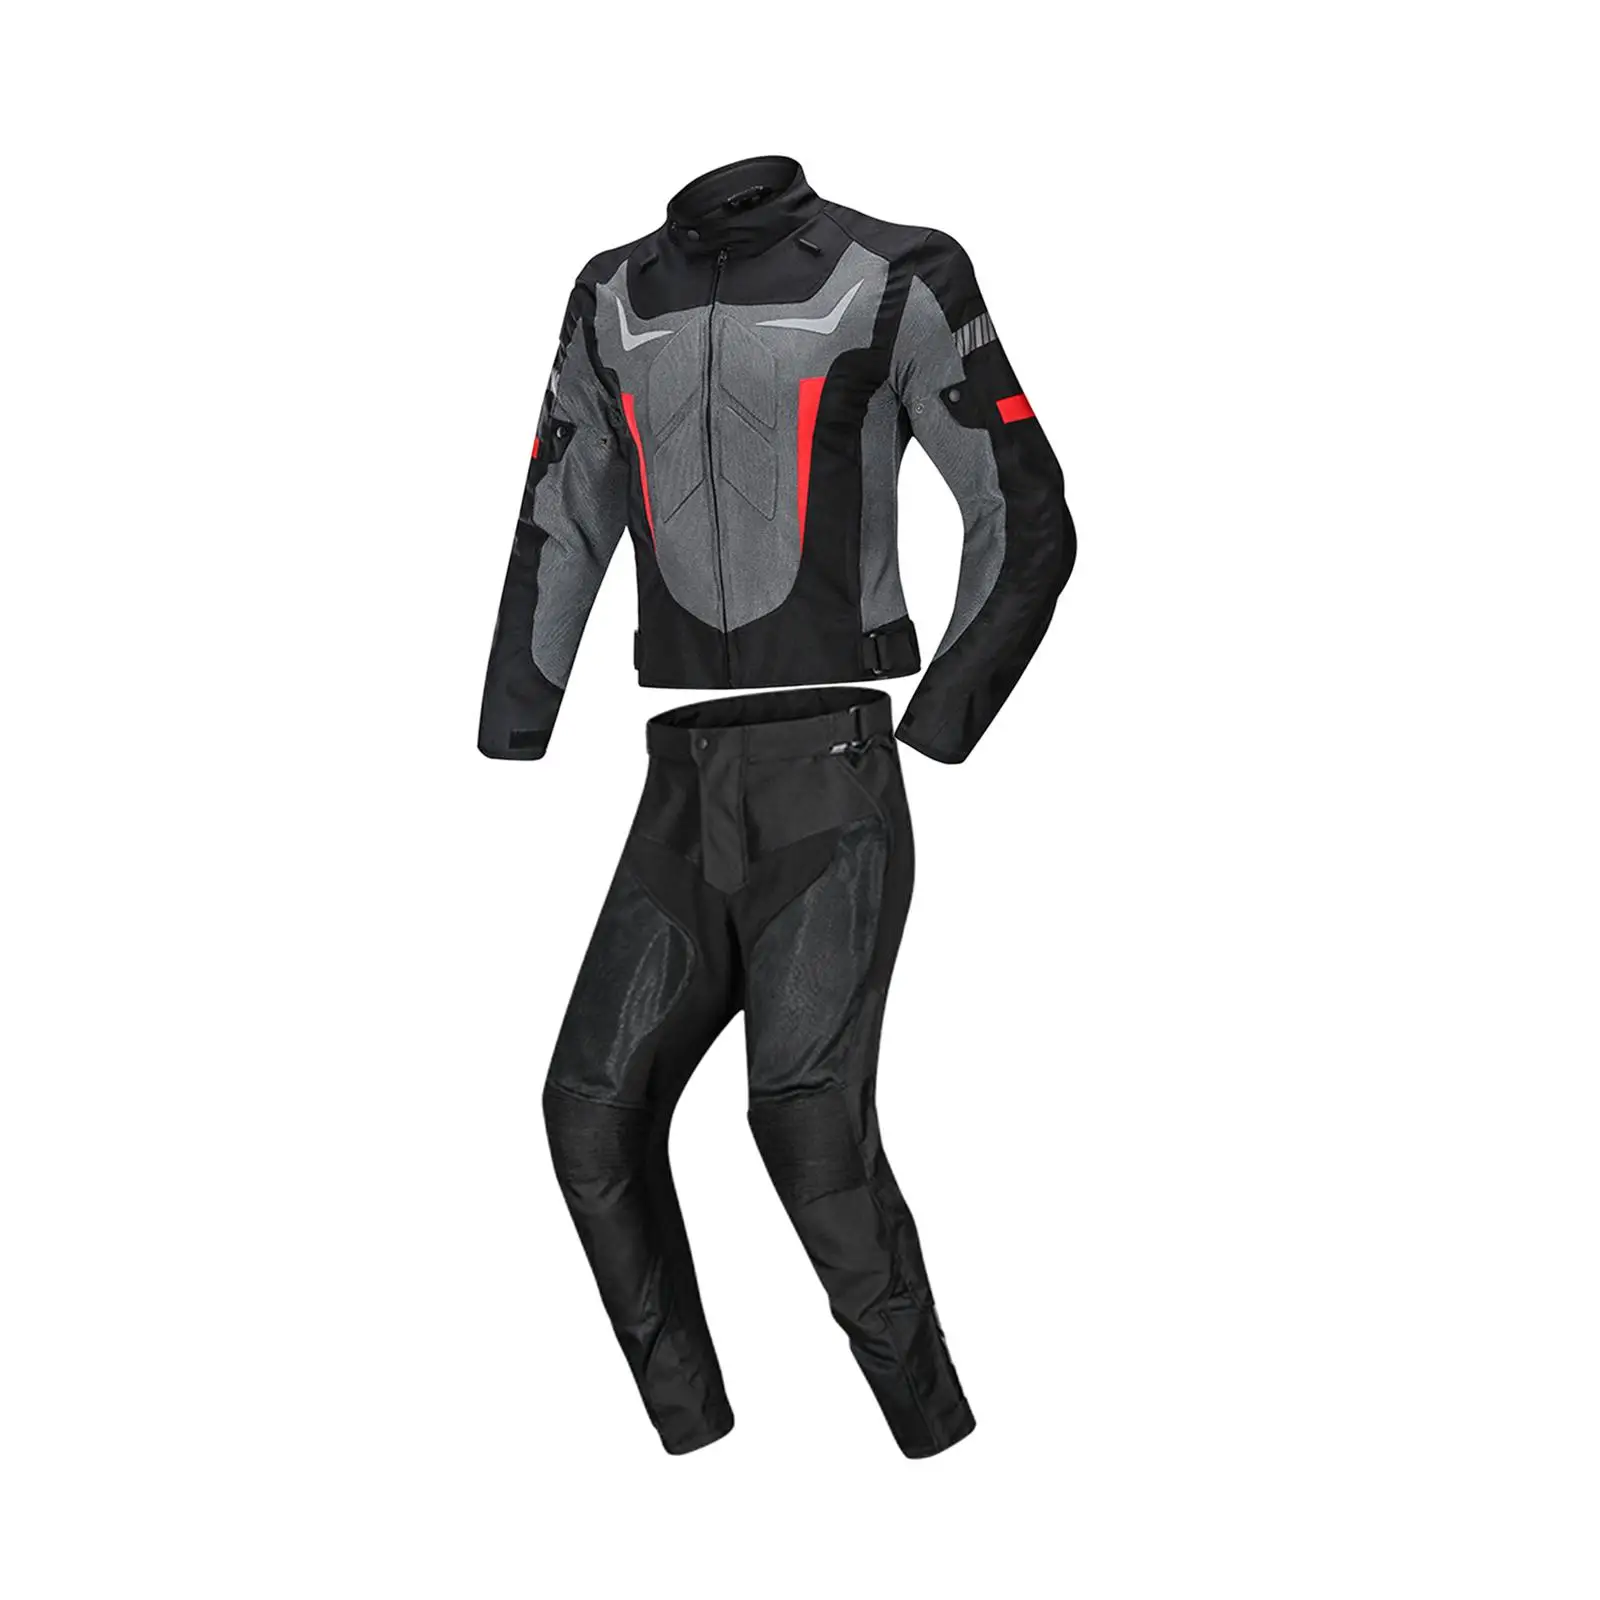 Waterproof motorcycle jacket pants suit protective padding riding jacket